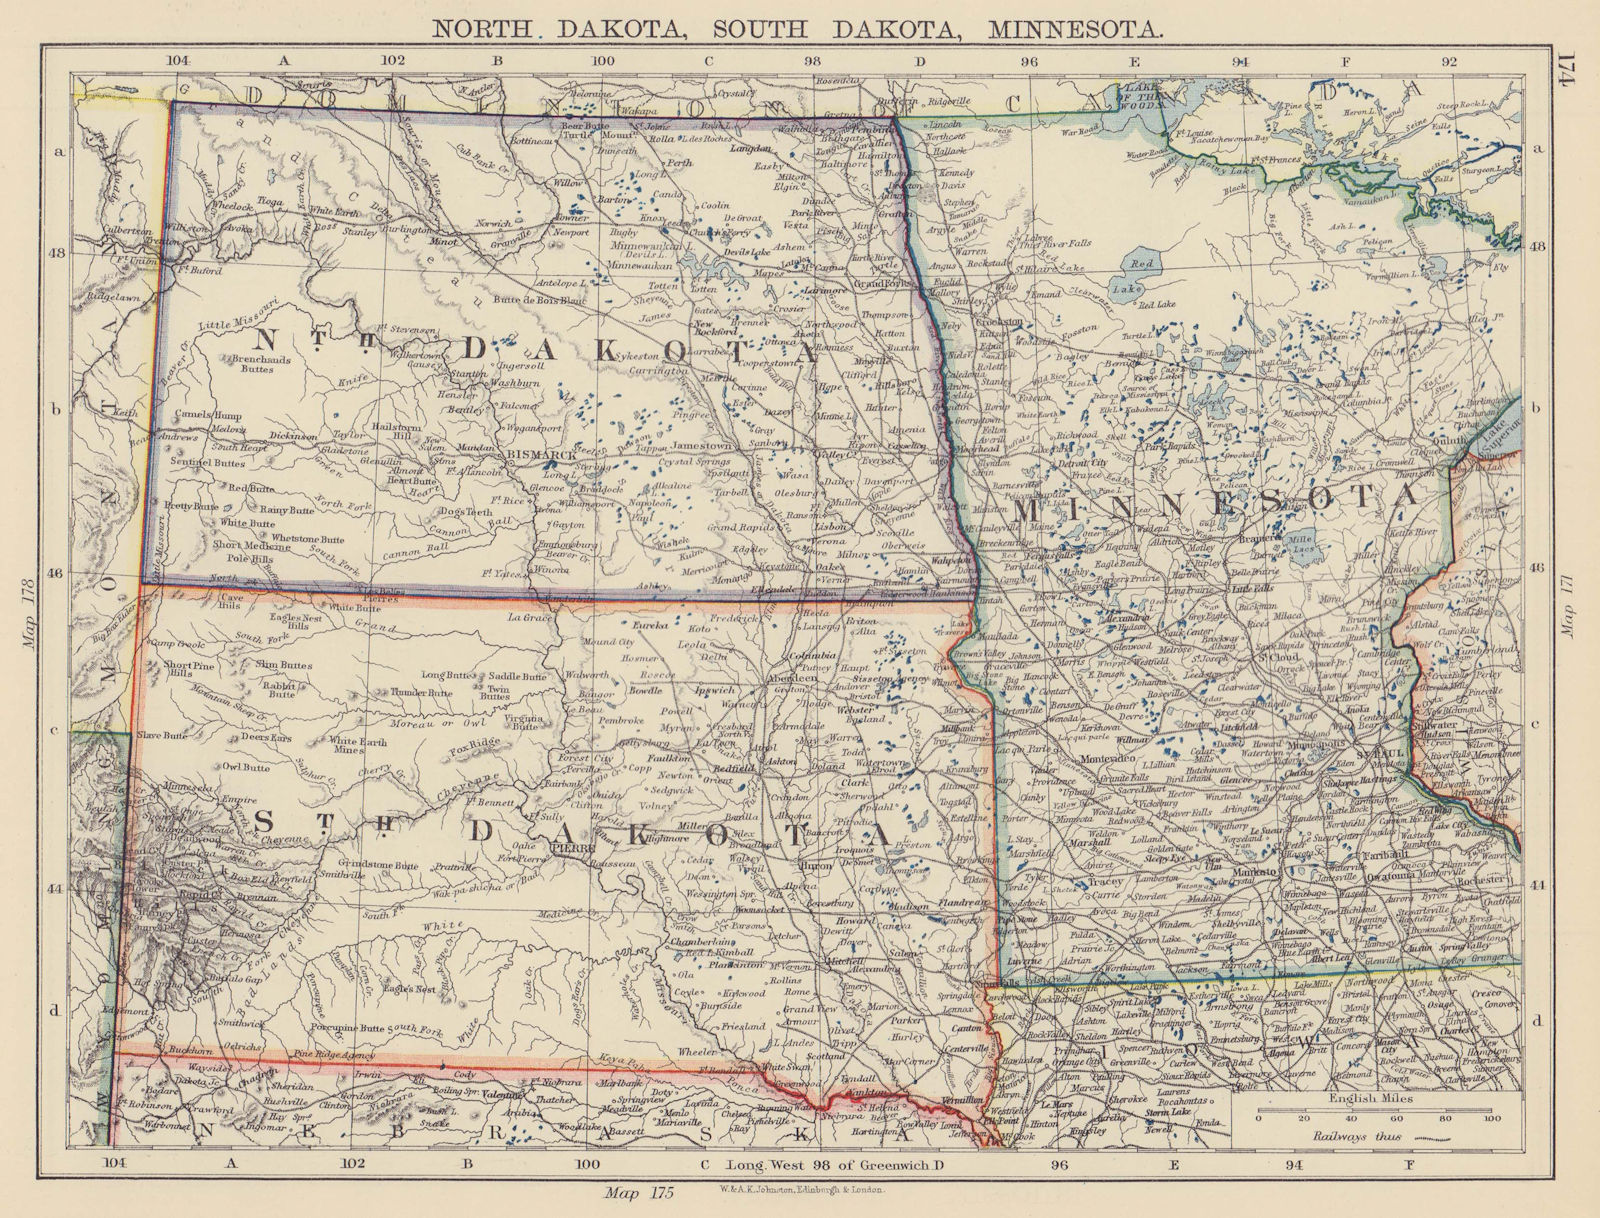 USA PLAINS STATES. North Dakota South Dakota Minnesota. Railroads 1901 old map